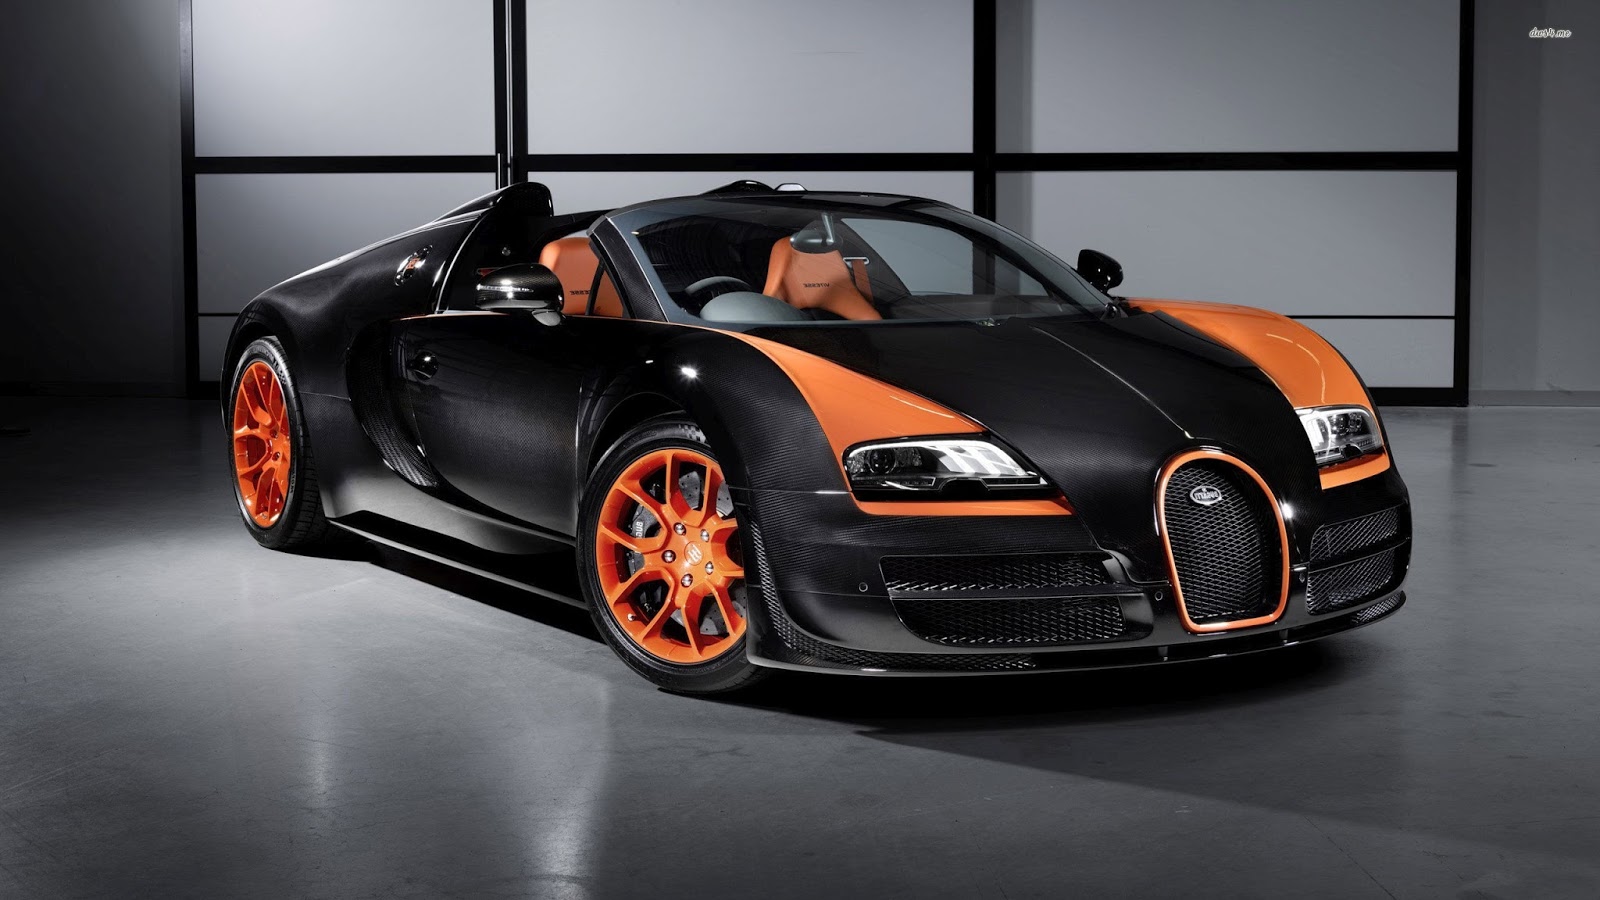 Kumpulan Foto  Mobil  Bugatti  Terbaru  Dunia Ottomotif